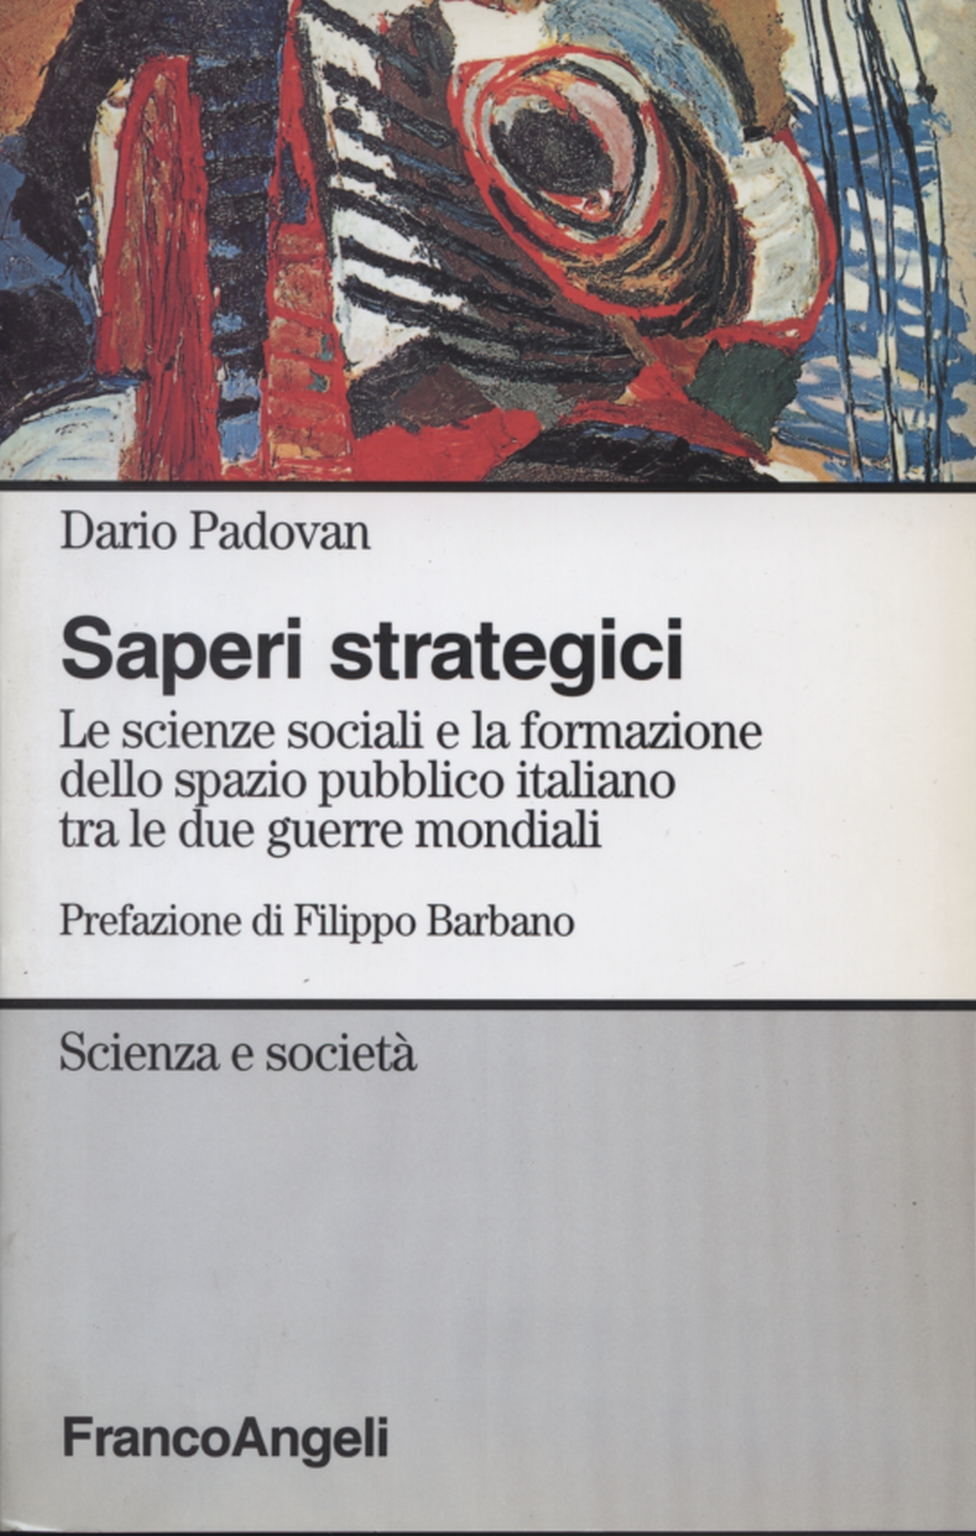 Knowledge of strategic, Dario Padovan